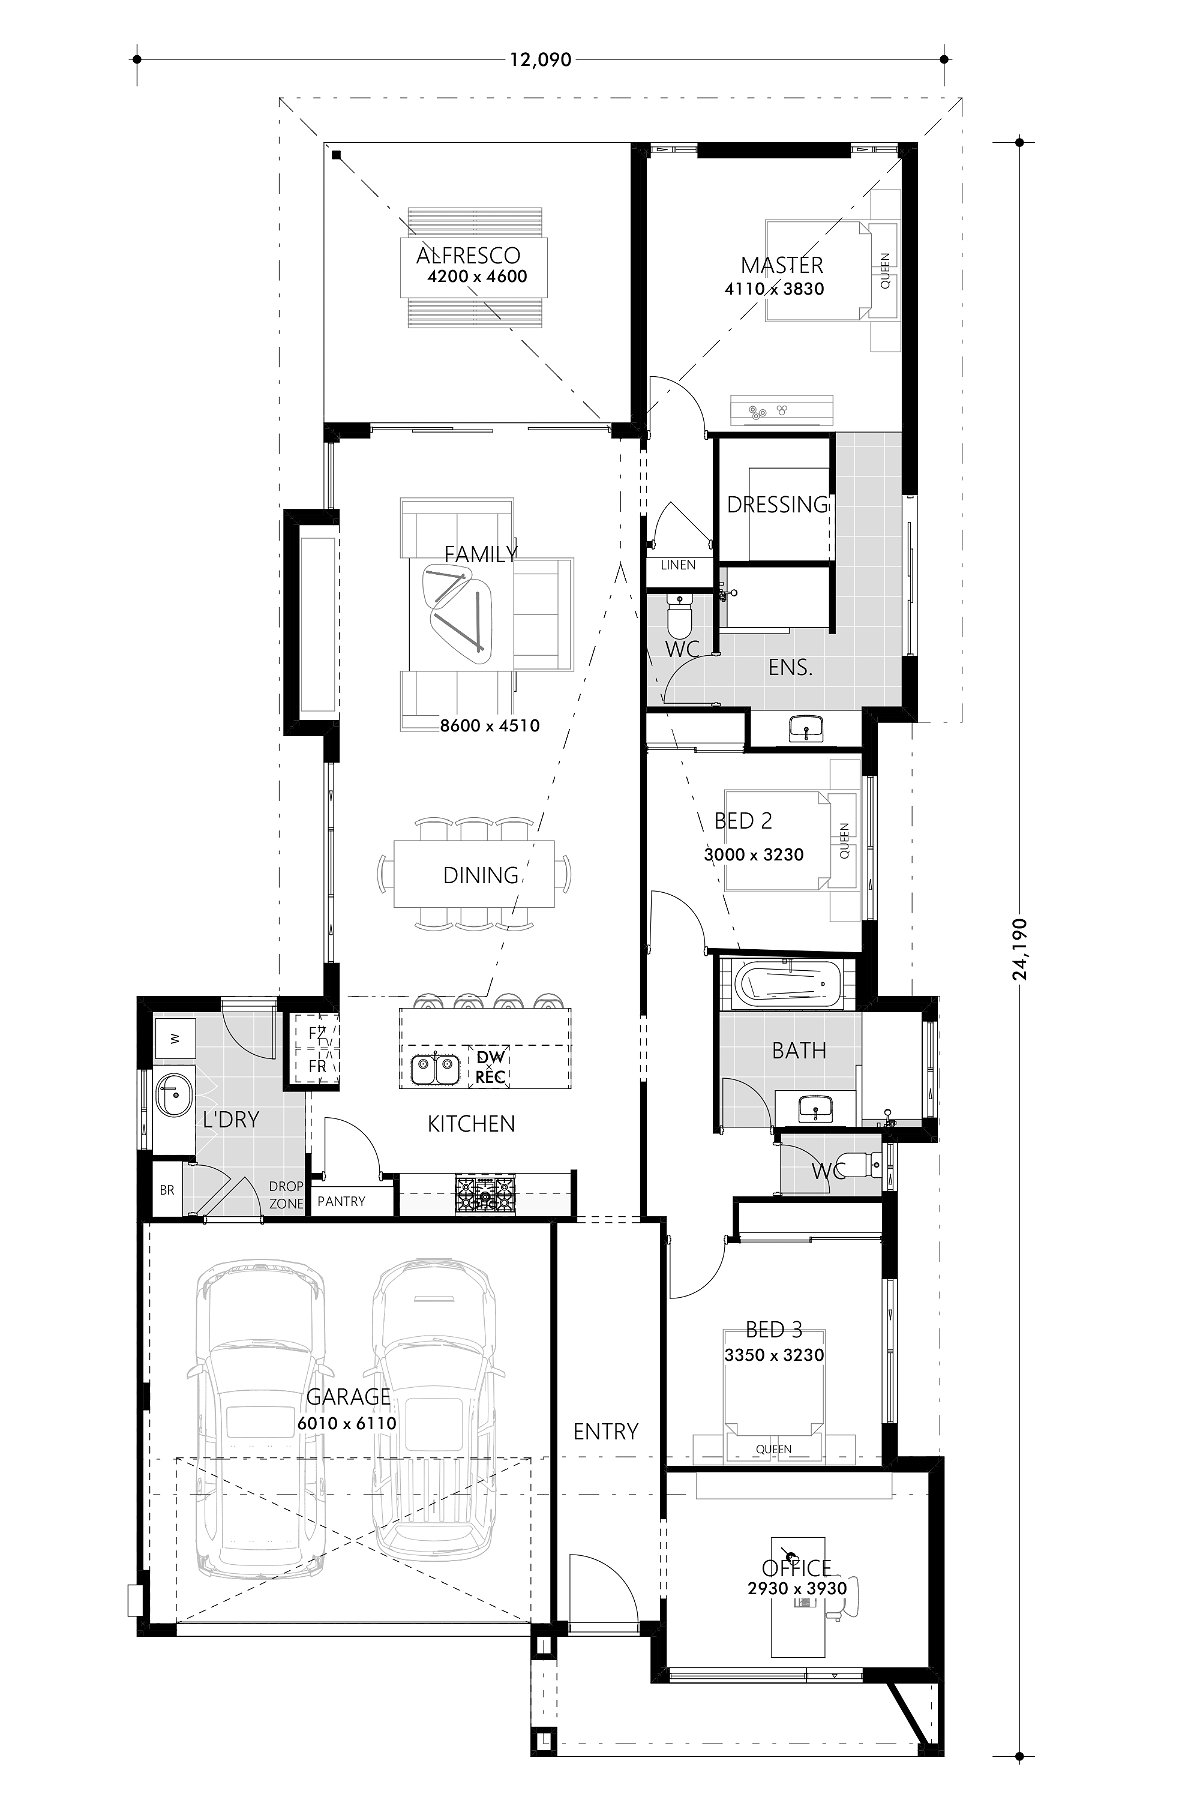 Residential Attitudes - Atomic Ranch - Floorplan - Atomic Ranch Floorplan Website